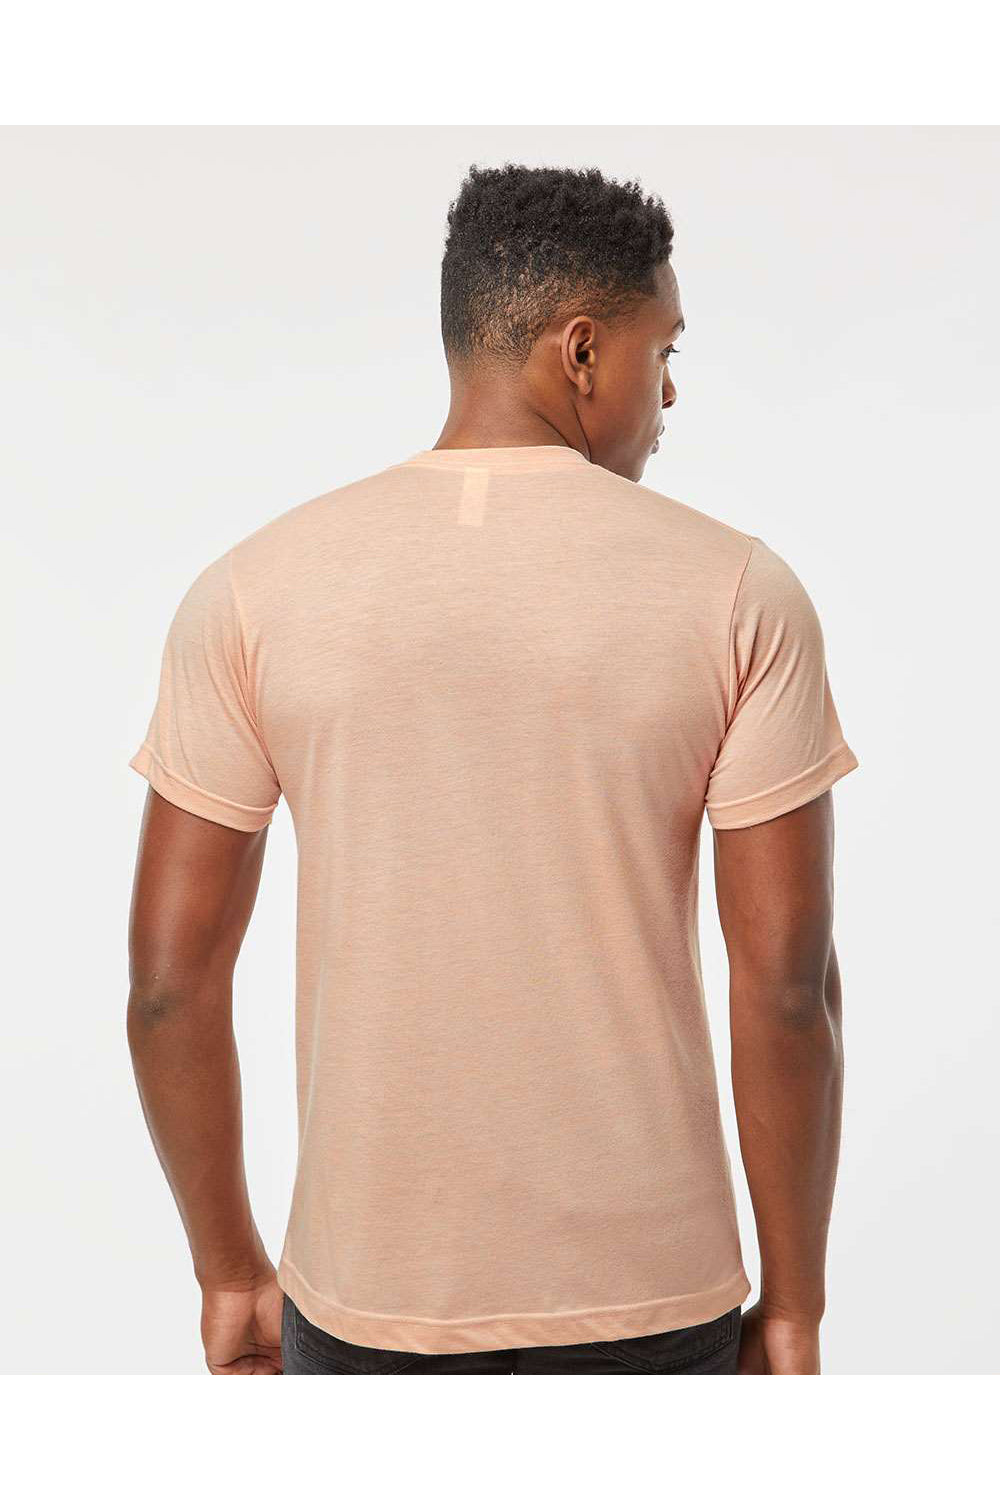 Tultex 241 Mens Poly-Rich Short Sleeve Crewneck T-Shirt Heather Peach Model Back